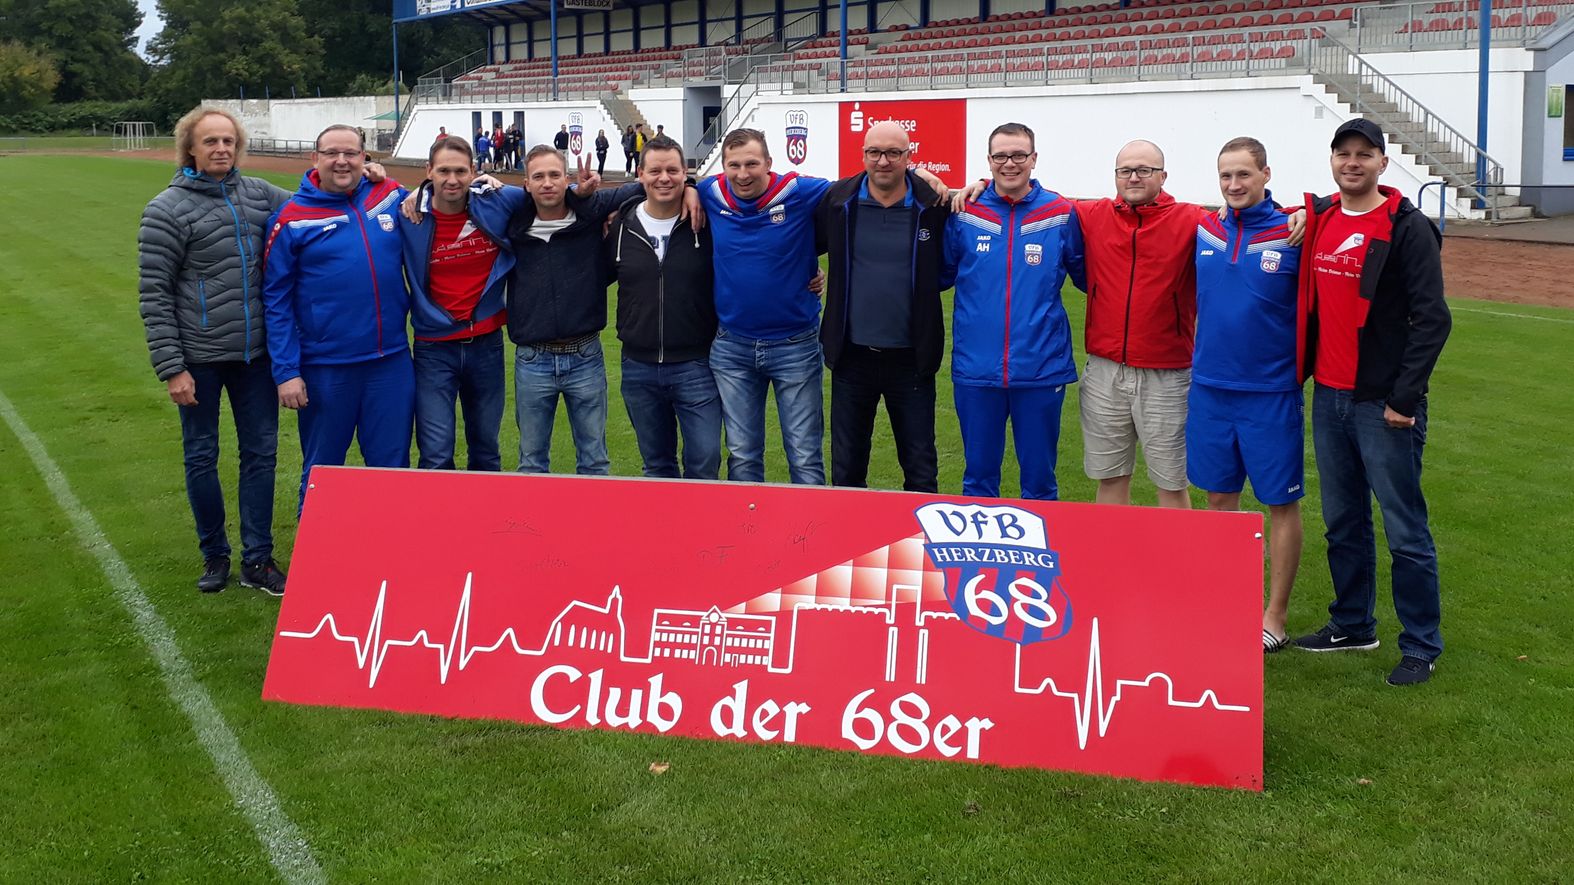 Club der 86er - VfB Herzberg 68